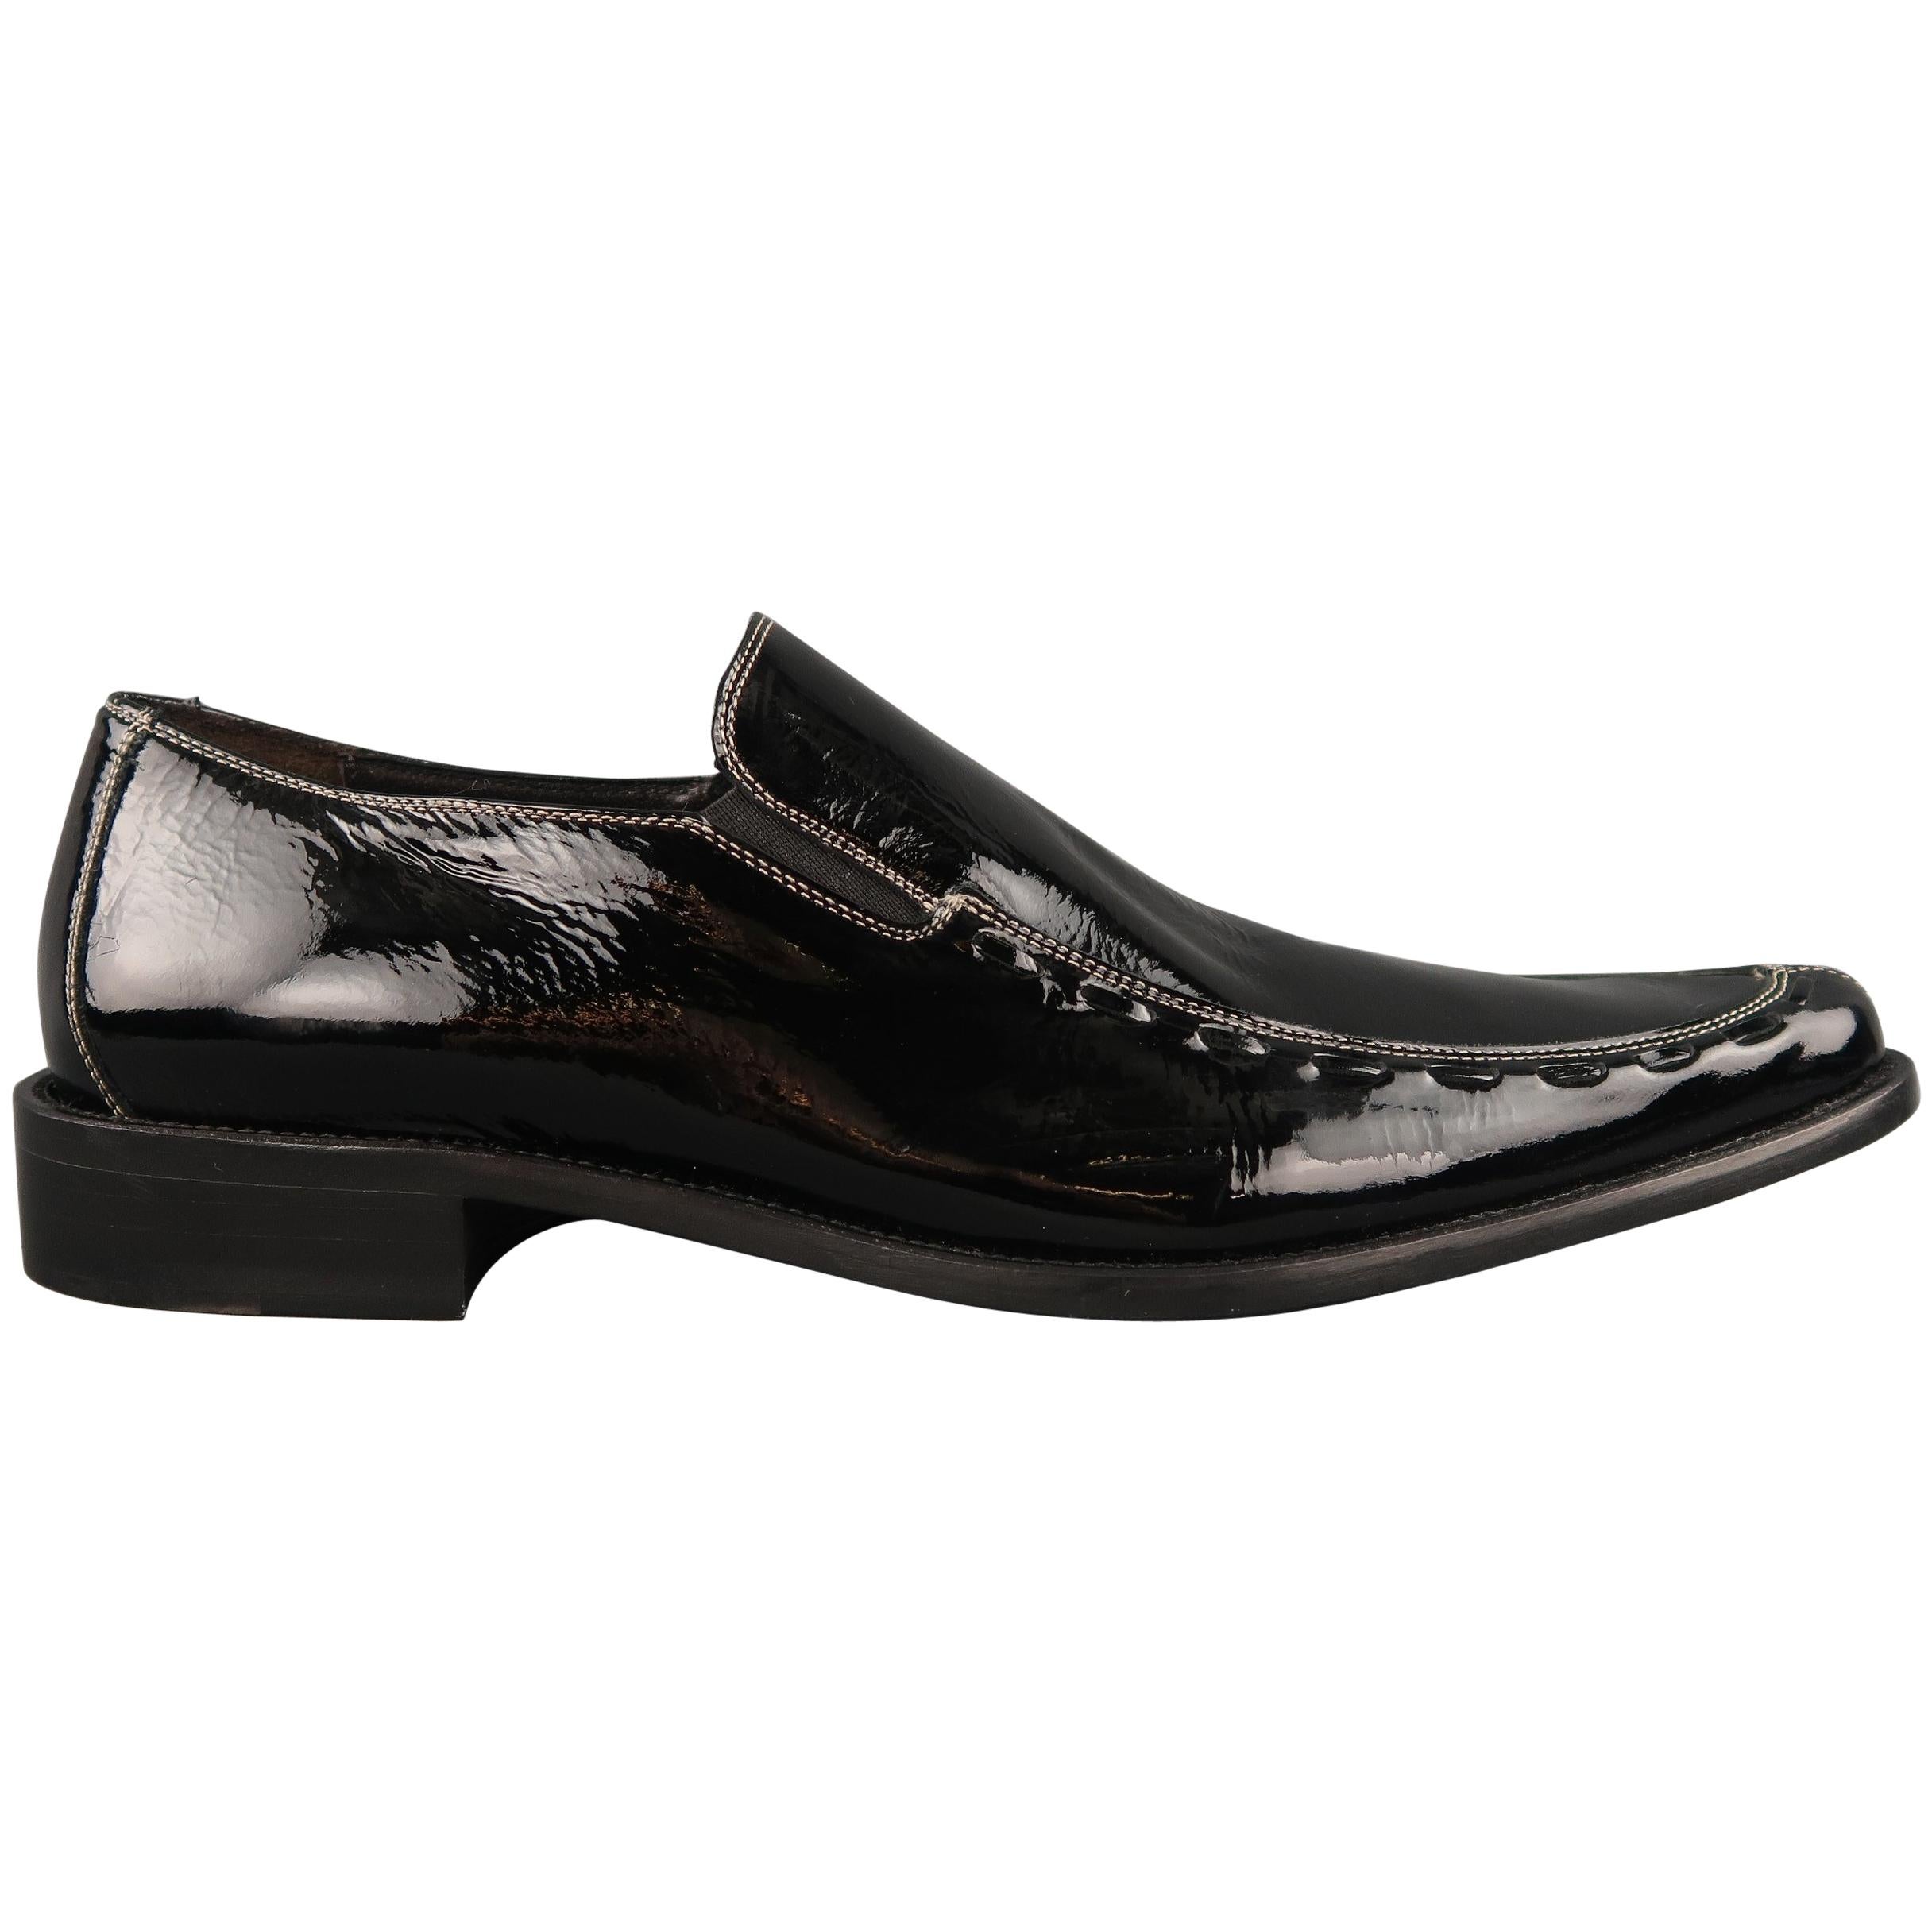 DONALD J PLINER Size 10 Black Contrast Stitch Patent Leather Whipstitch Loafers